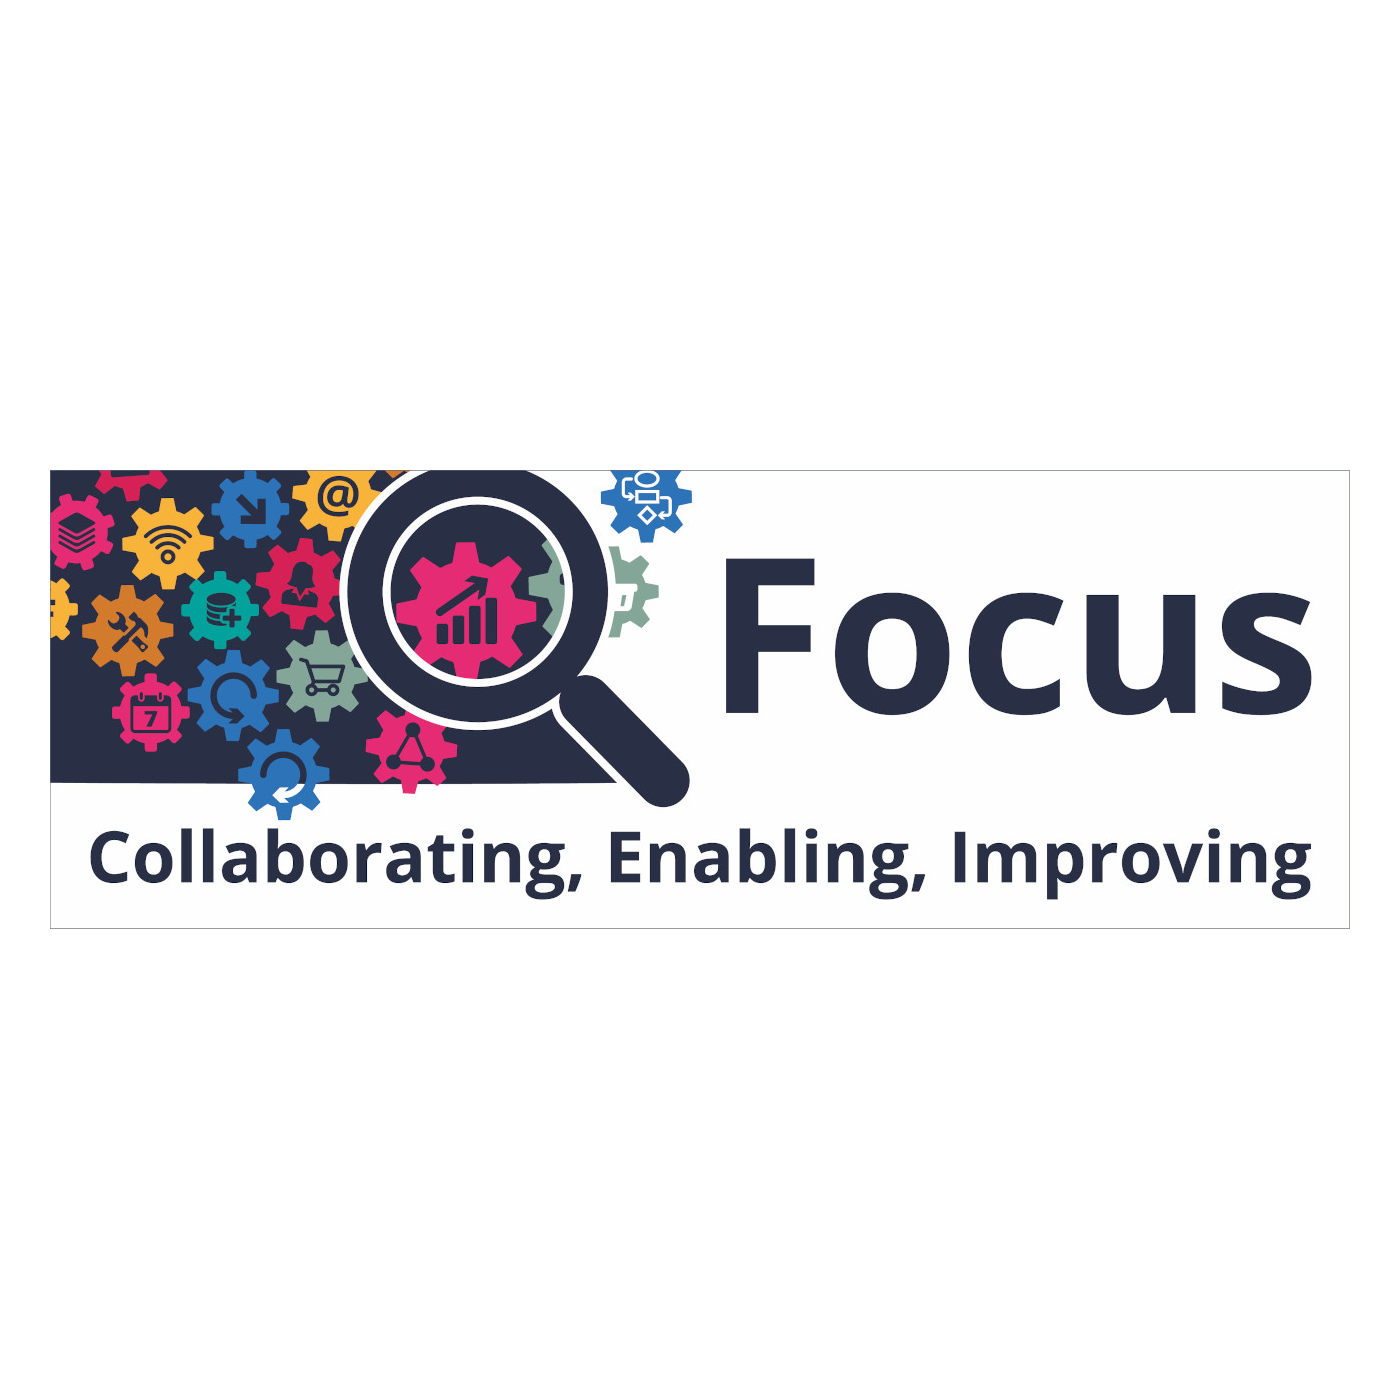 Focus: the University’s change and continuous improvement team